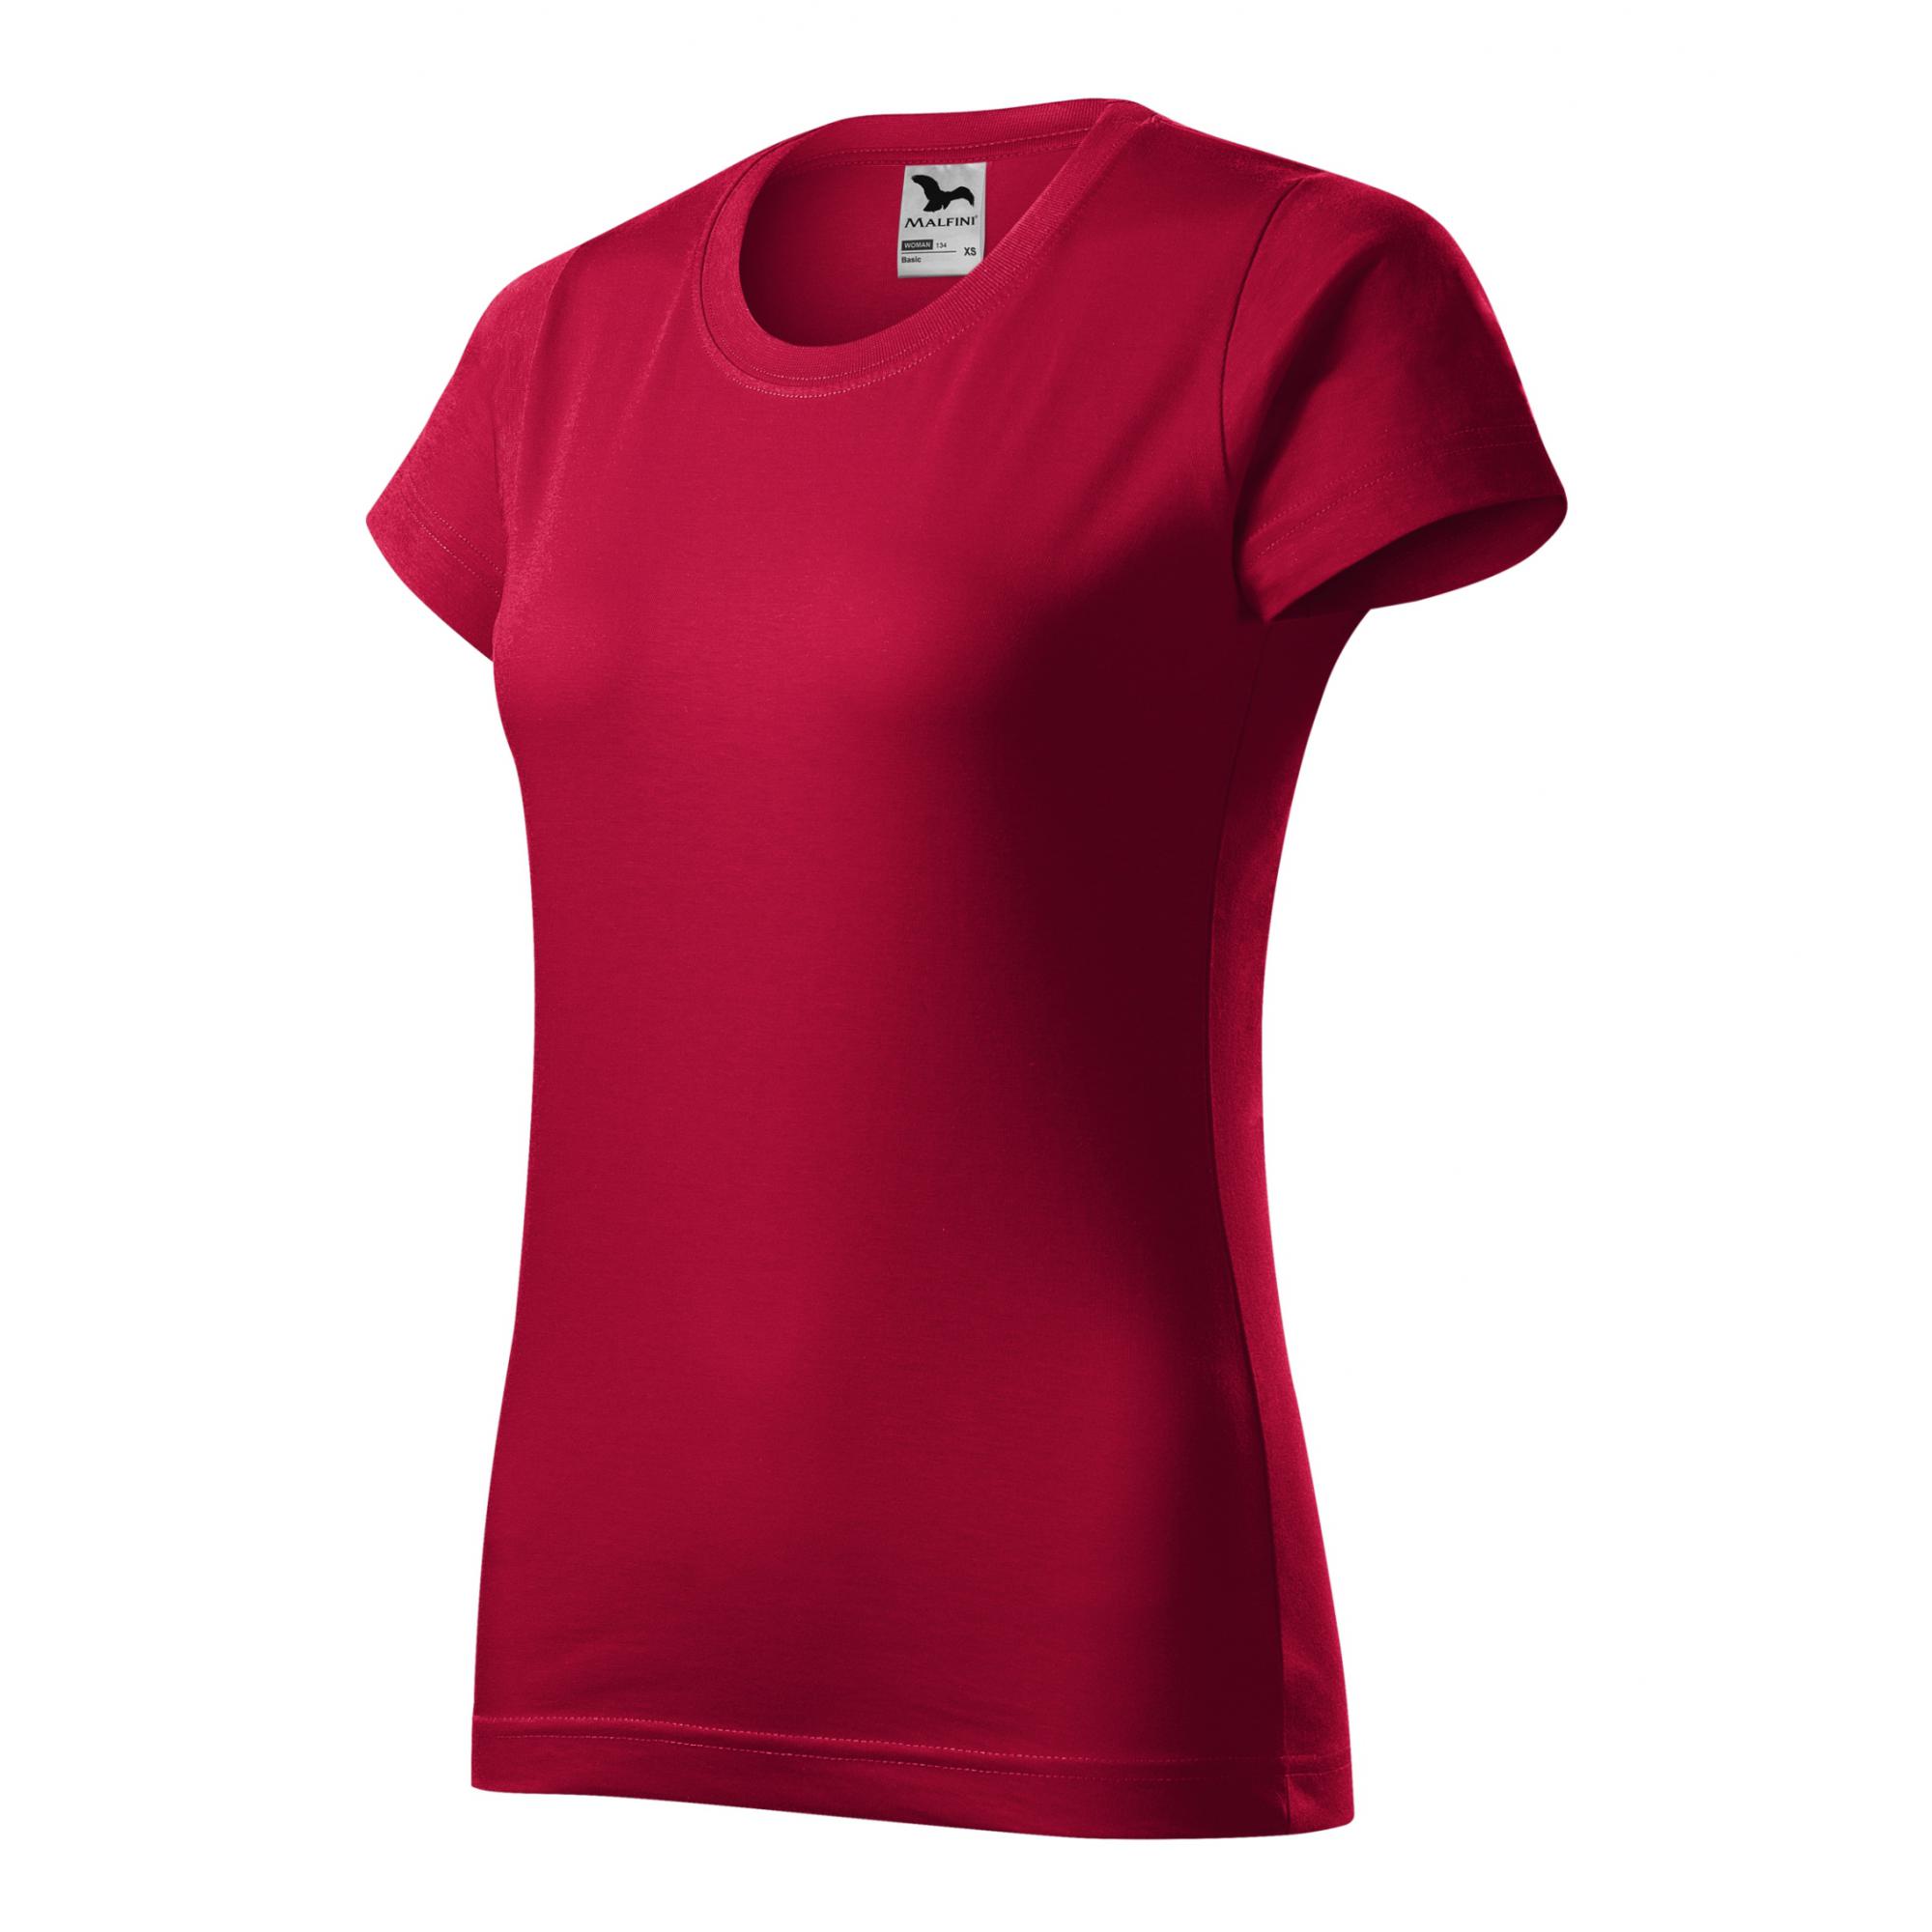 Tricou pentru damă Basic 134 Rosu marlboro XL